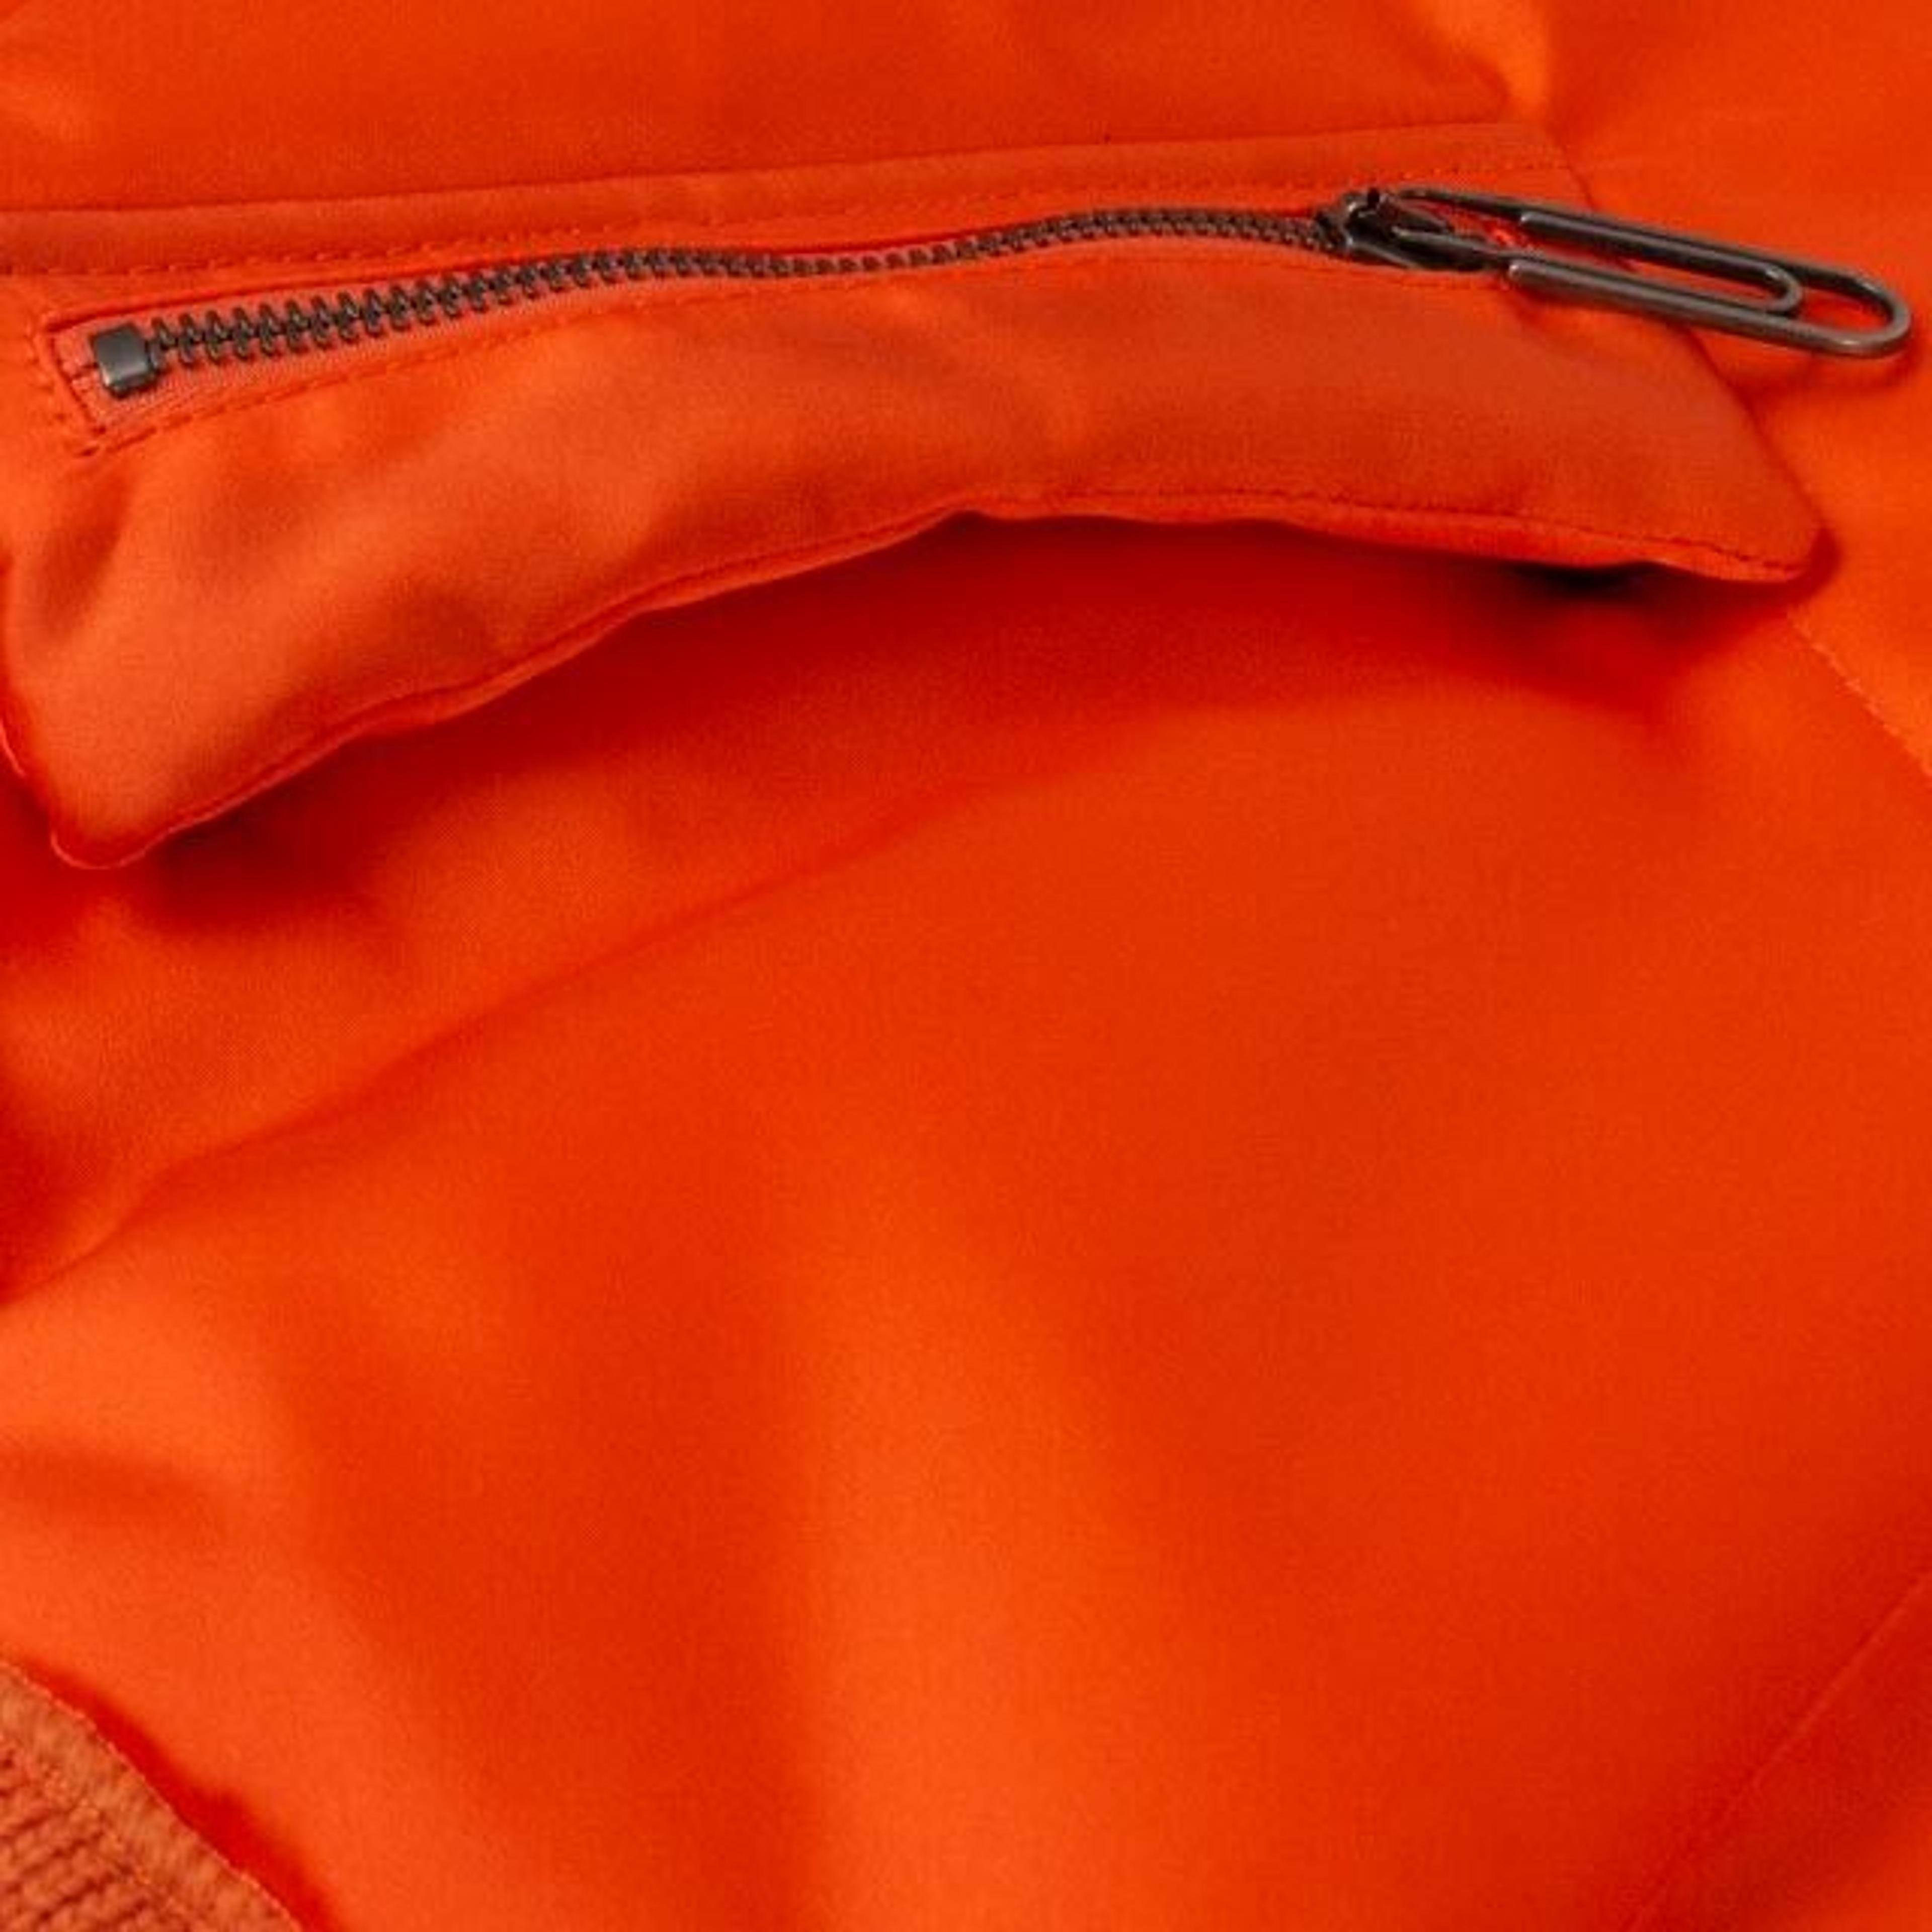 Alternate View 5 of Cropped Arrows Vest Jacket - Orange